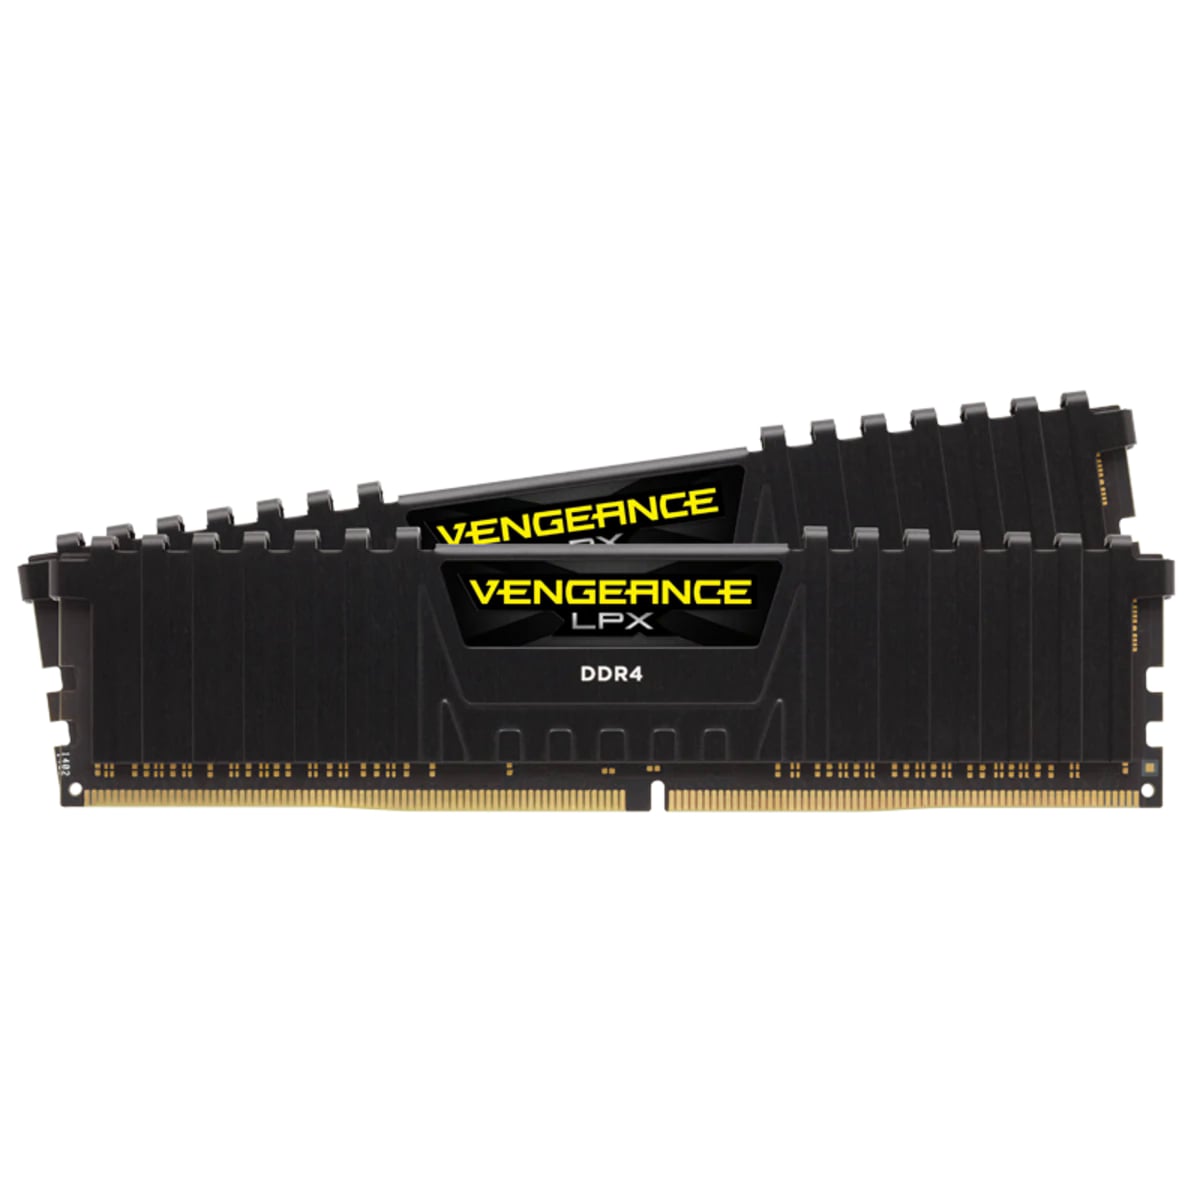 RAM CORSAIR VENGEANCE LPX 16GB (2x8GB) DDR4 2666MHz - CMK16GX4M2A2666C16 - songphuong.vn